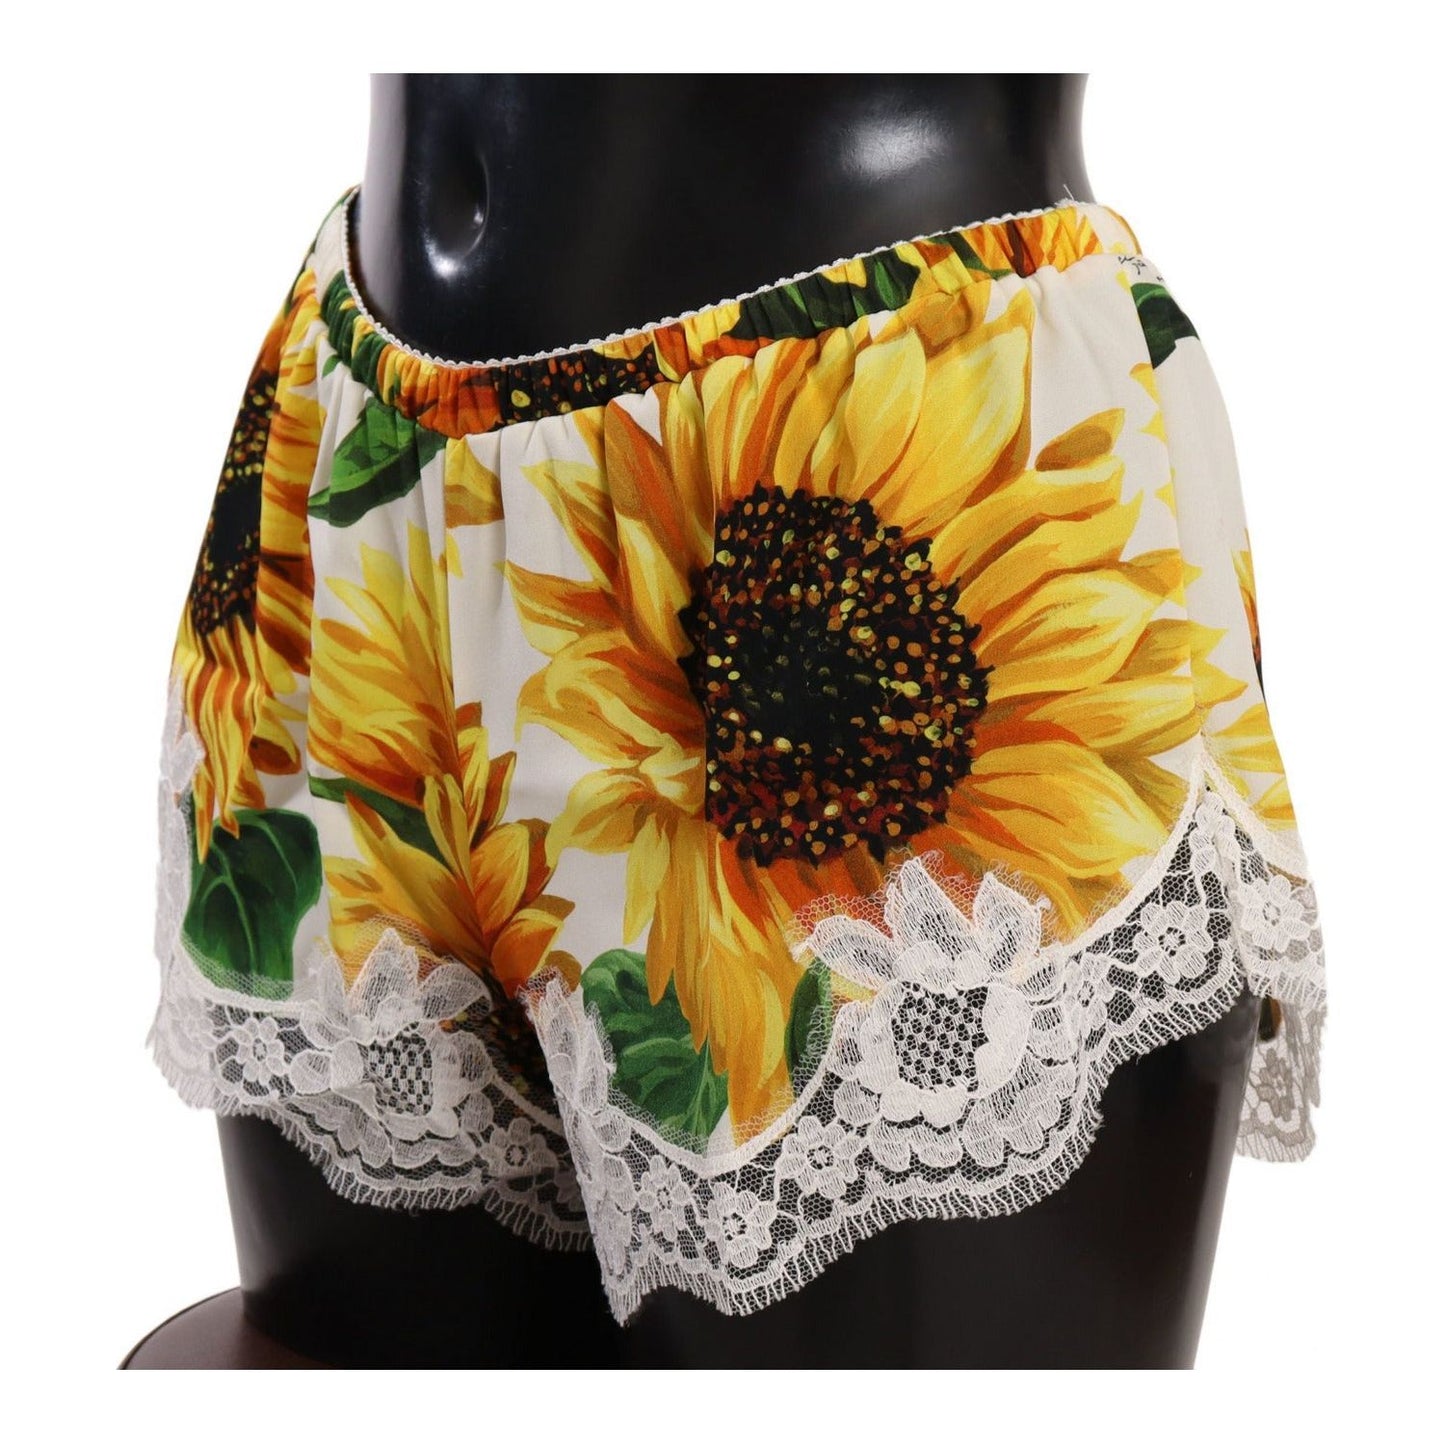 Dolce & Gabbana Sunflower Lace Lingerie Shorts - Silk Blend WOMAN UNDERWEAR white-sunflower-lace-lingerie-underwear